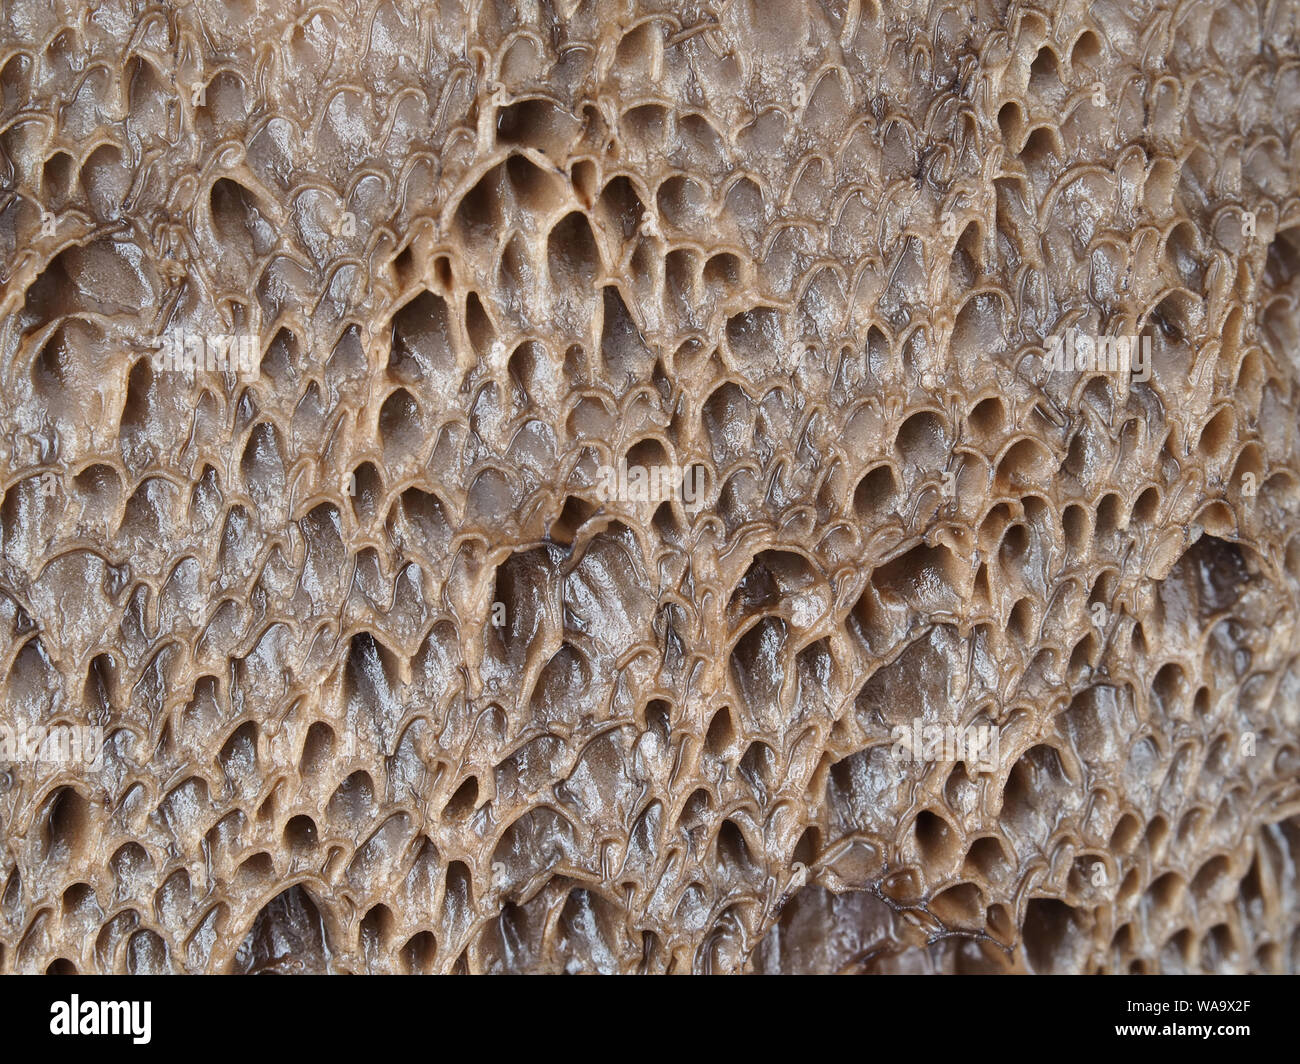 Macro close-up photo of old bolete mushroom pores Stock Photo